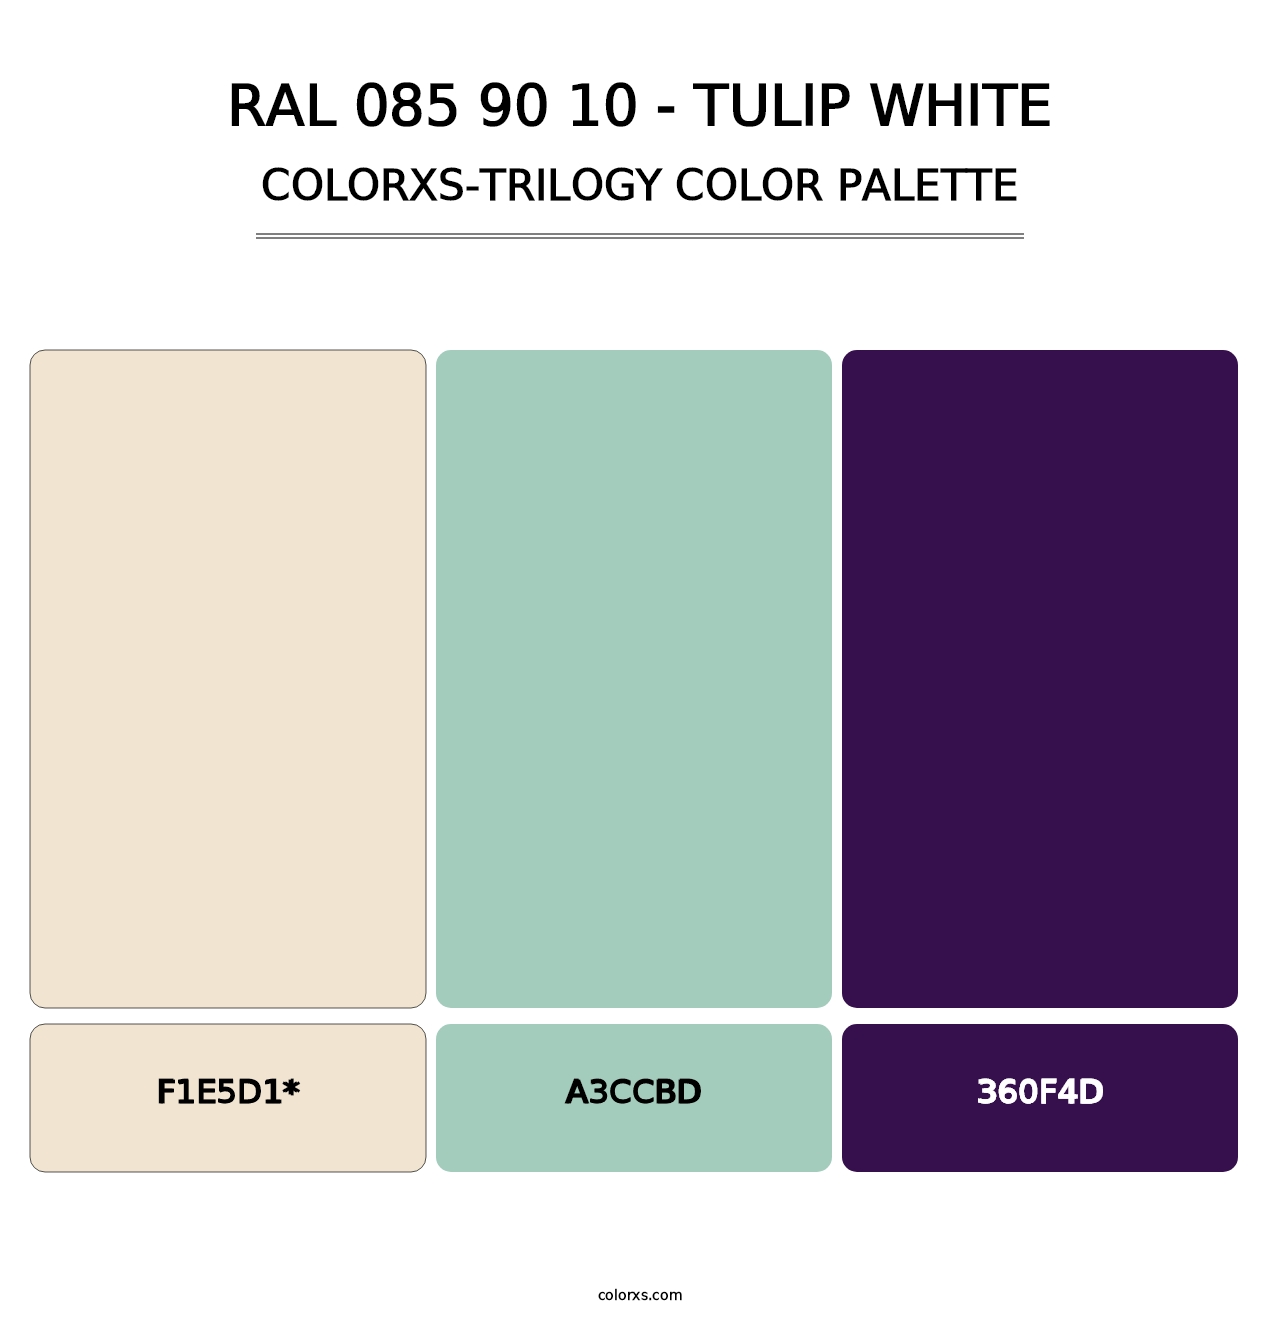 RAL 085 90 10 - Tulip White - Colorxs Trilogy Palette